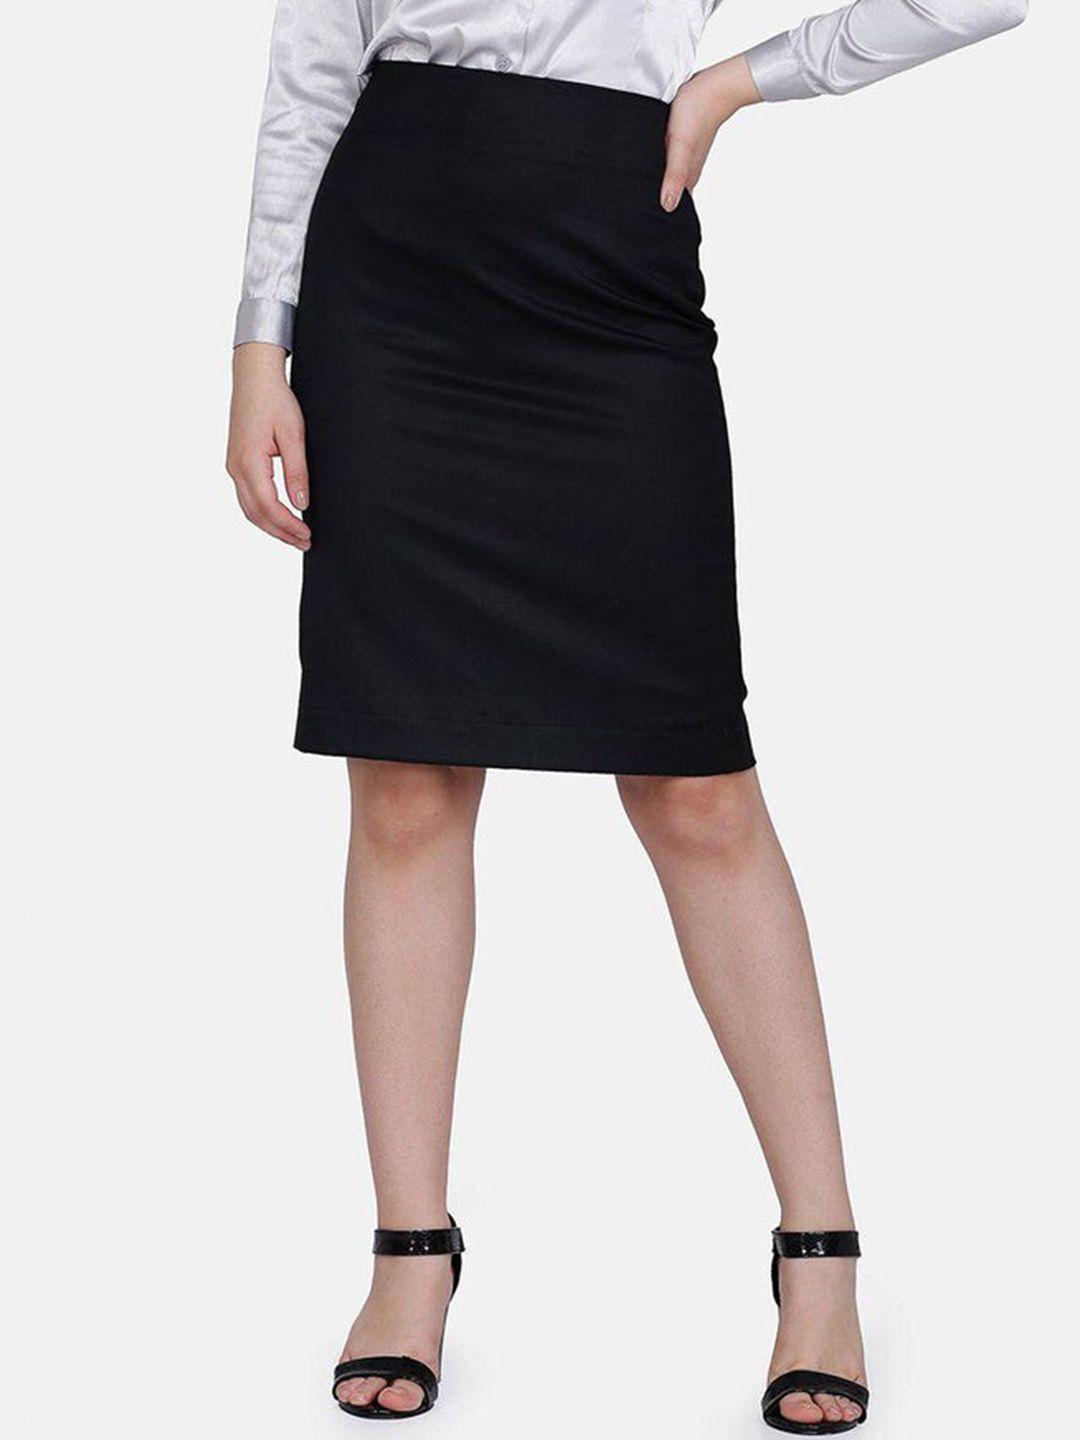 powersutra  women knee length formal pencil skirt